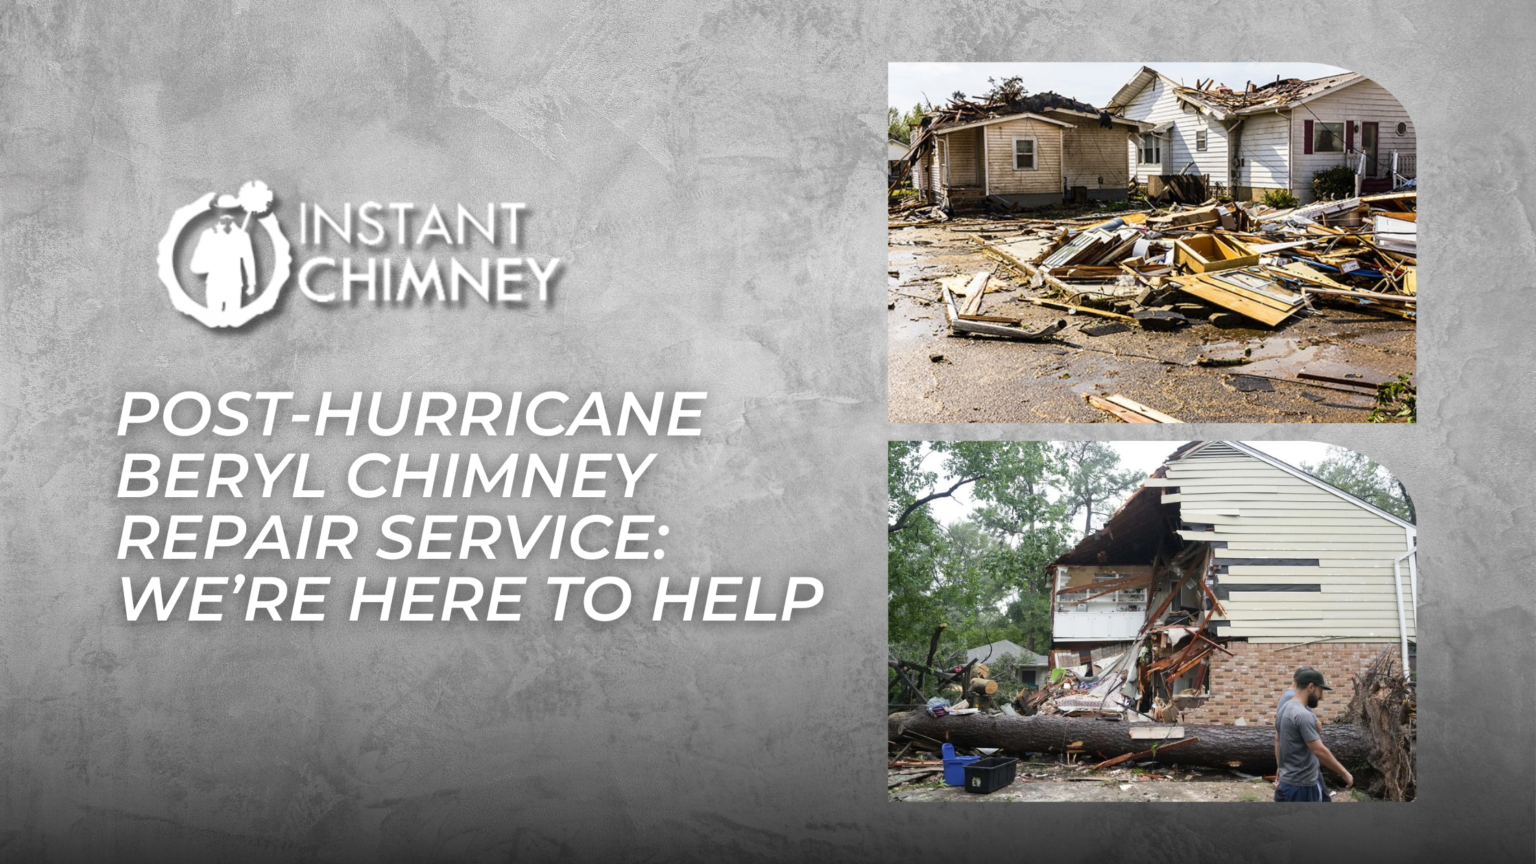 Post-Hurricane Beryl Chimney Repair Service: We’re Here to Help